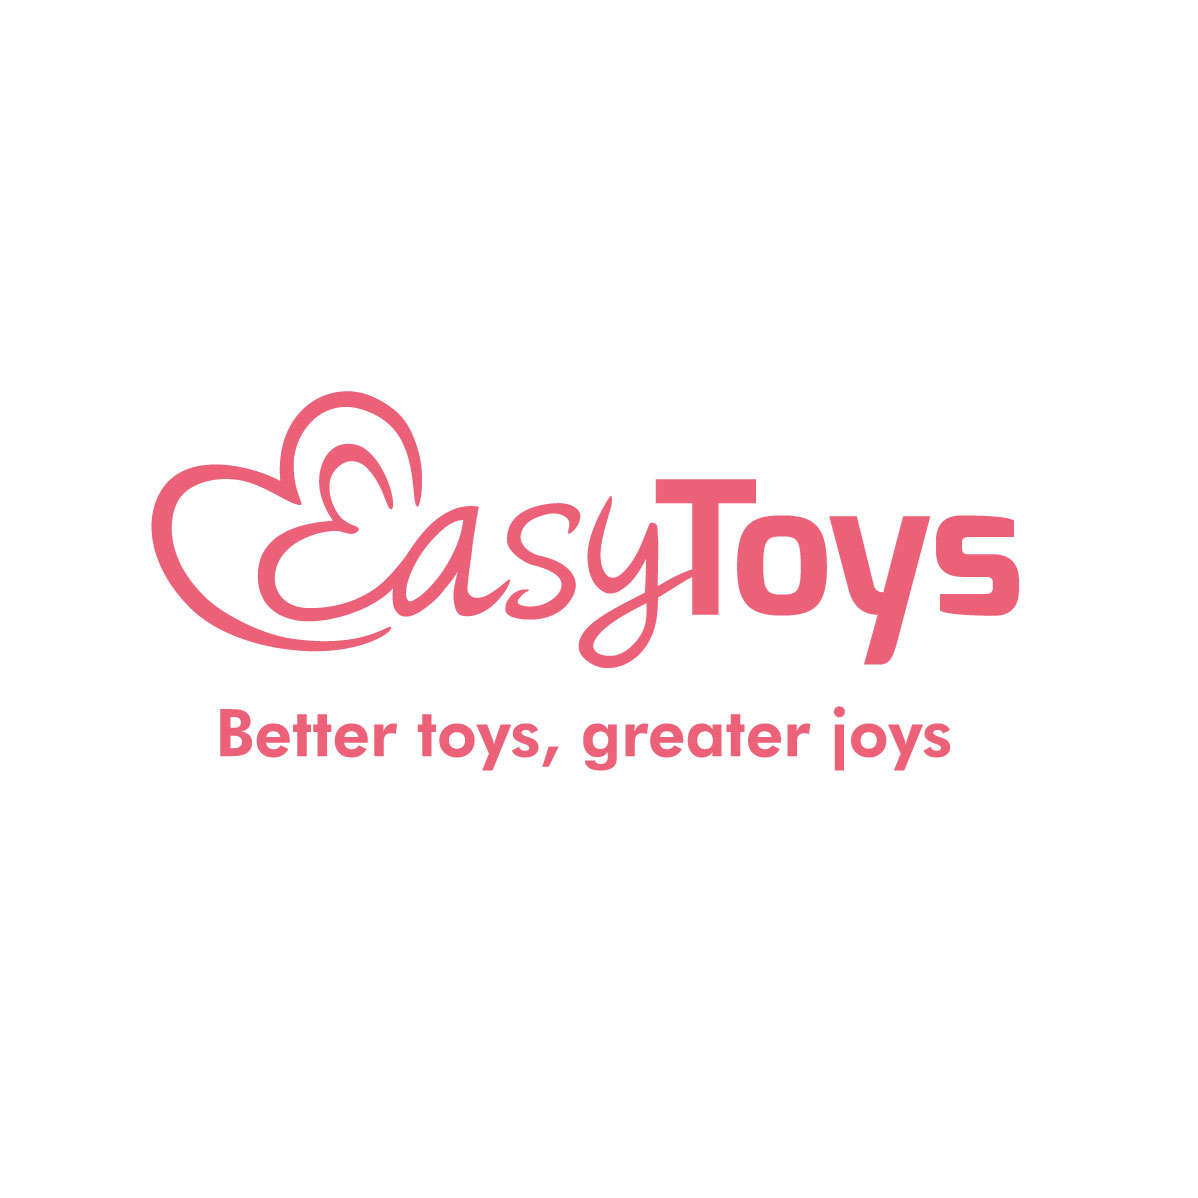 logo EasyToys